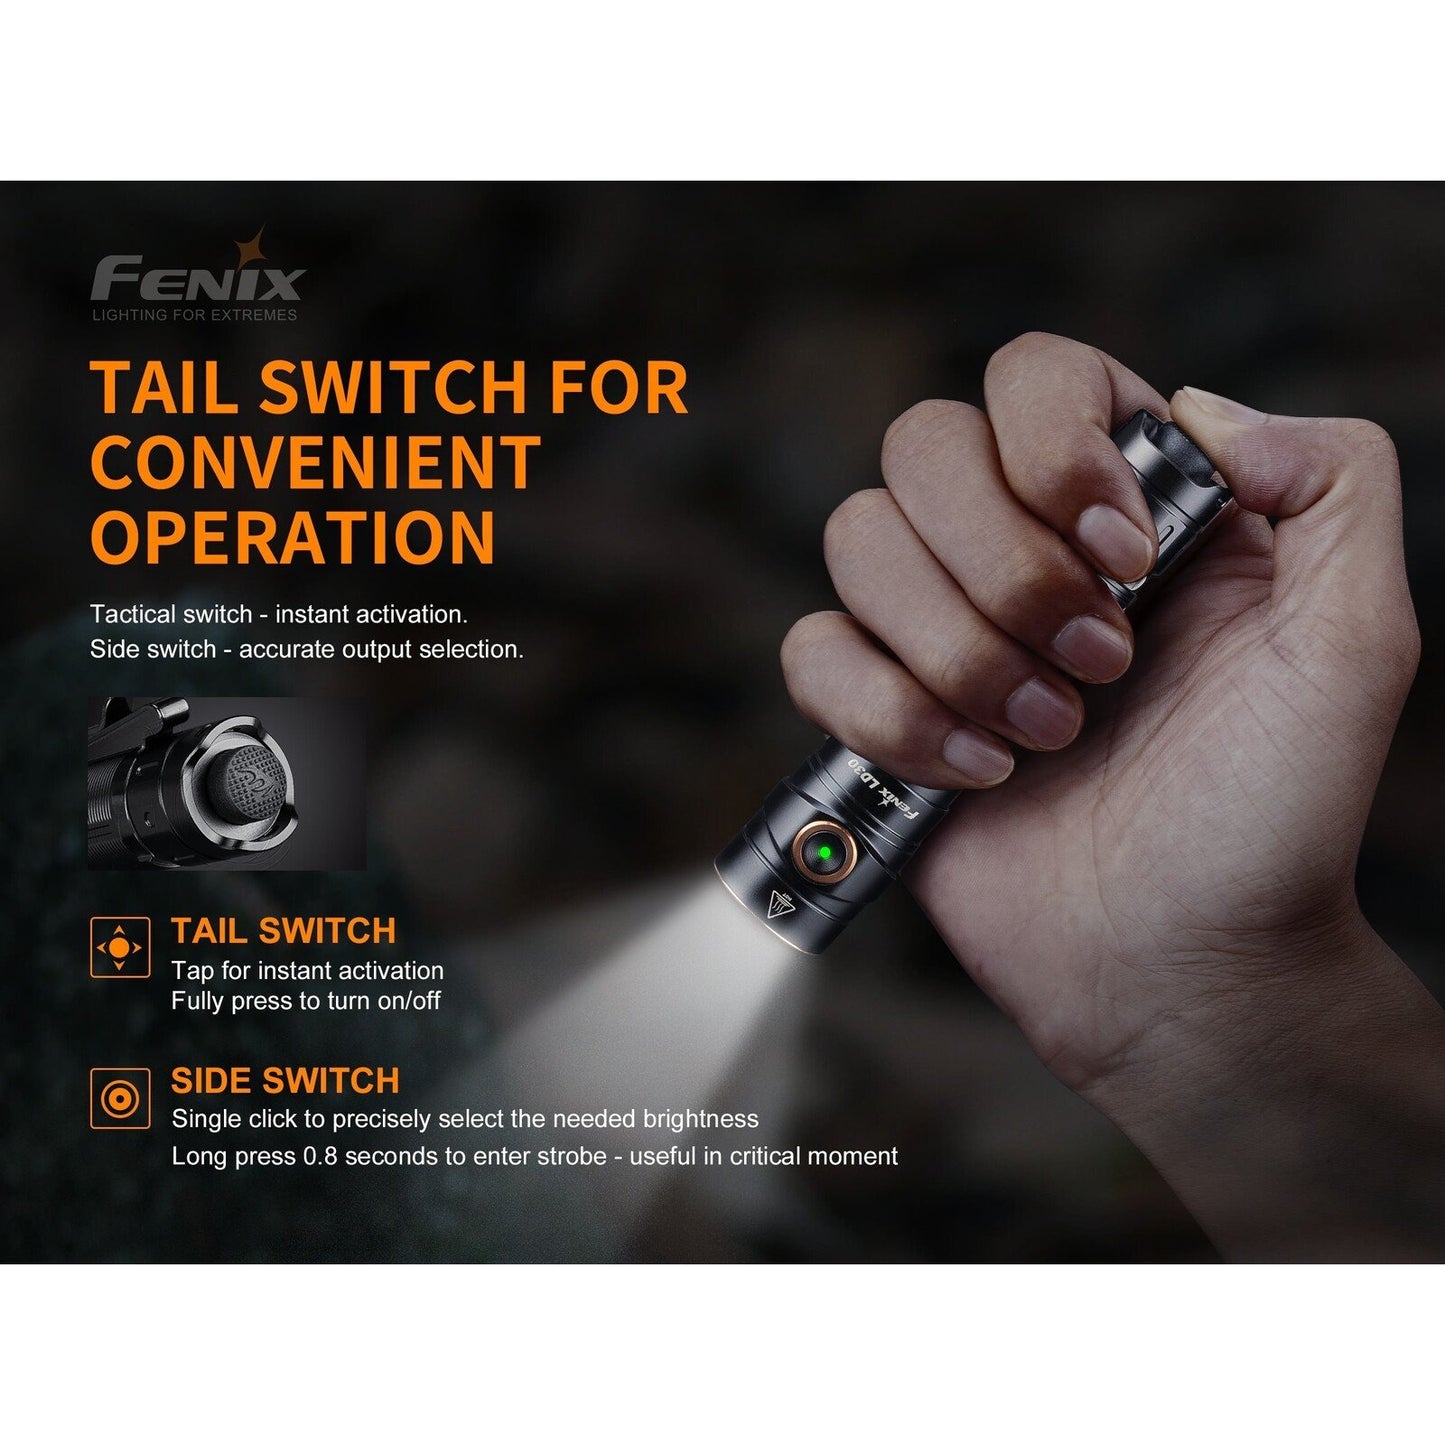 Fenix Fenix Ultra-Compact 1600 Lumens Led Torch Flashlight - Usb Type-C & Batteries Included #ld30 Slate Gray